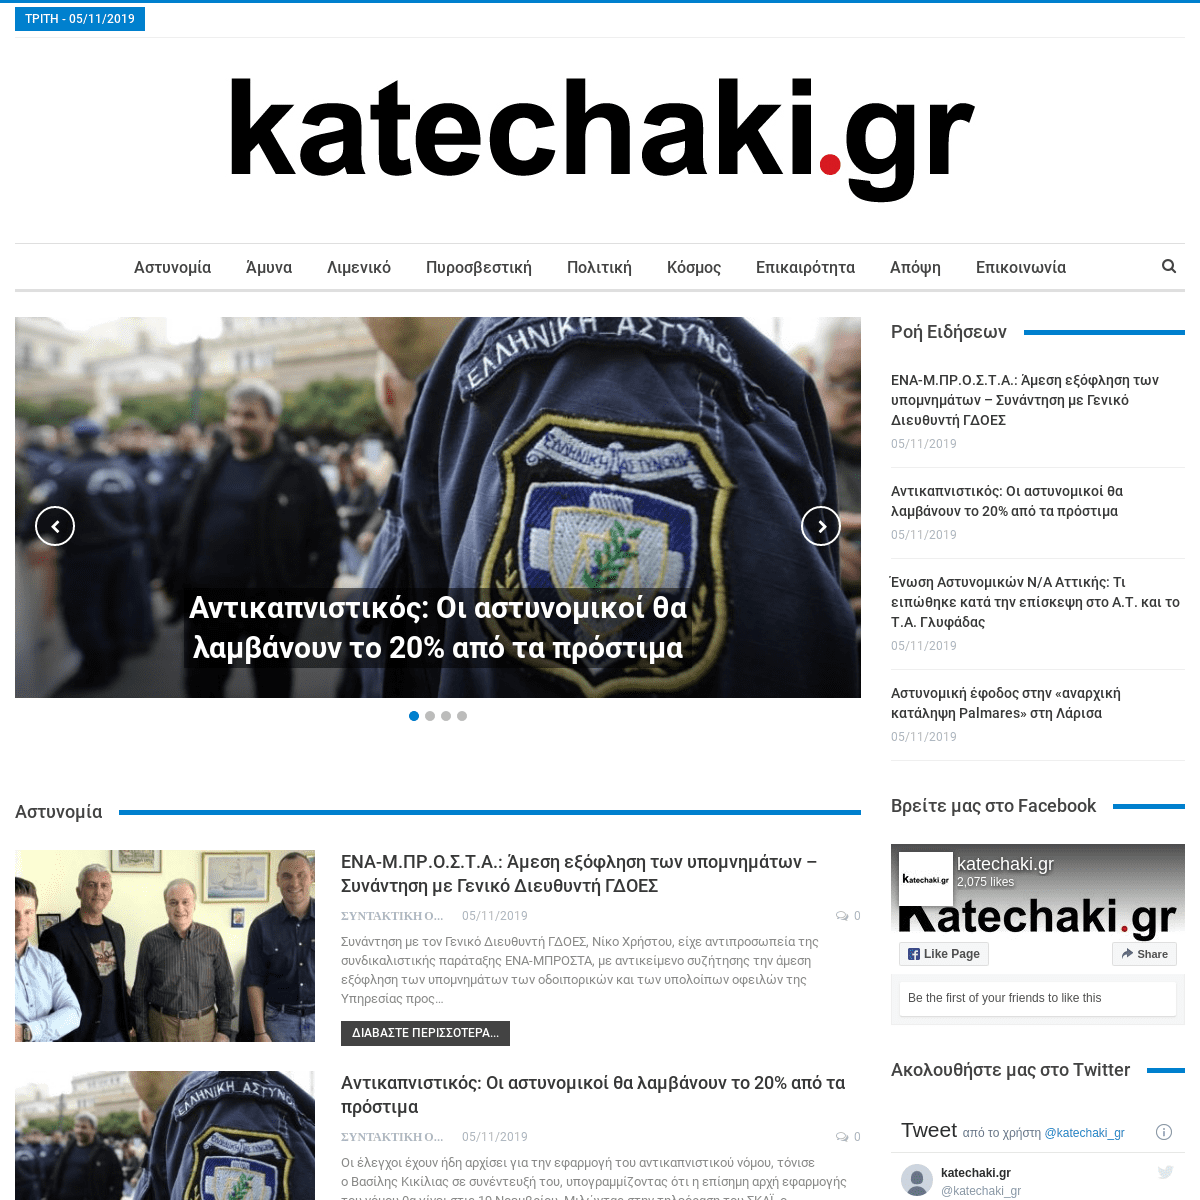 A complete backup of katechaki.gr